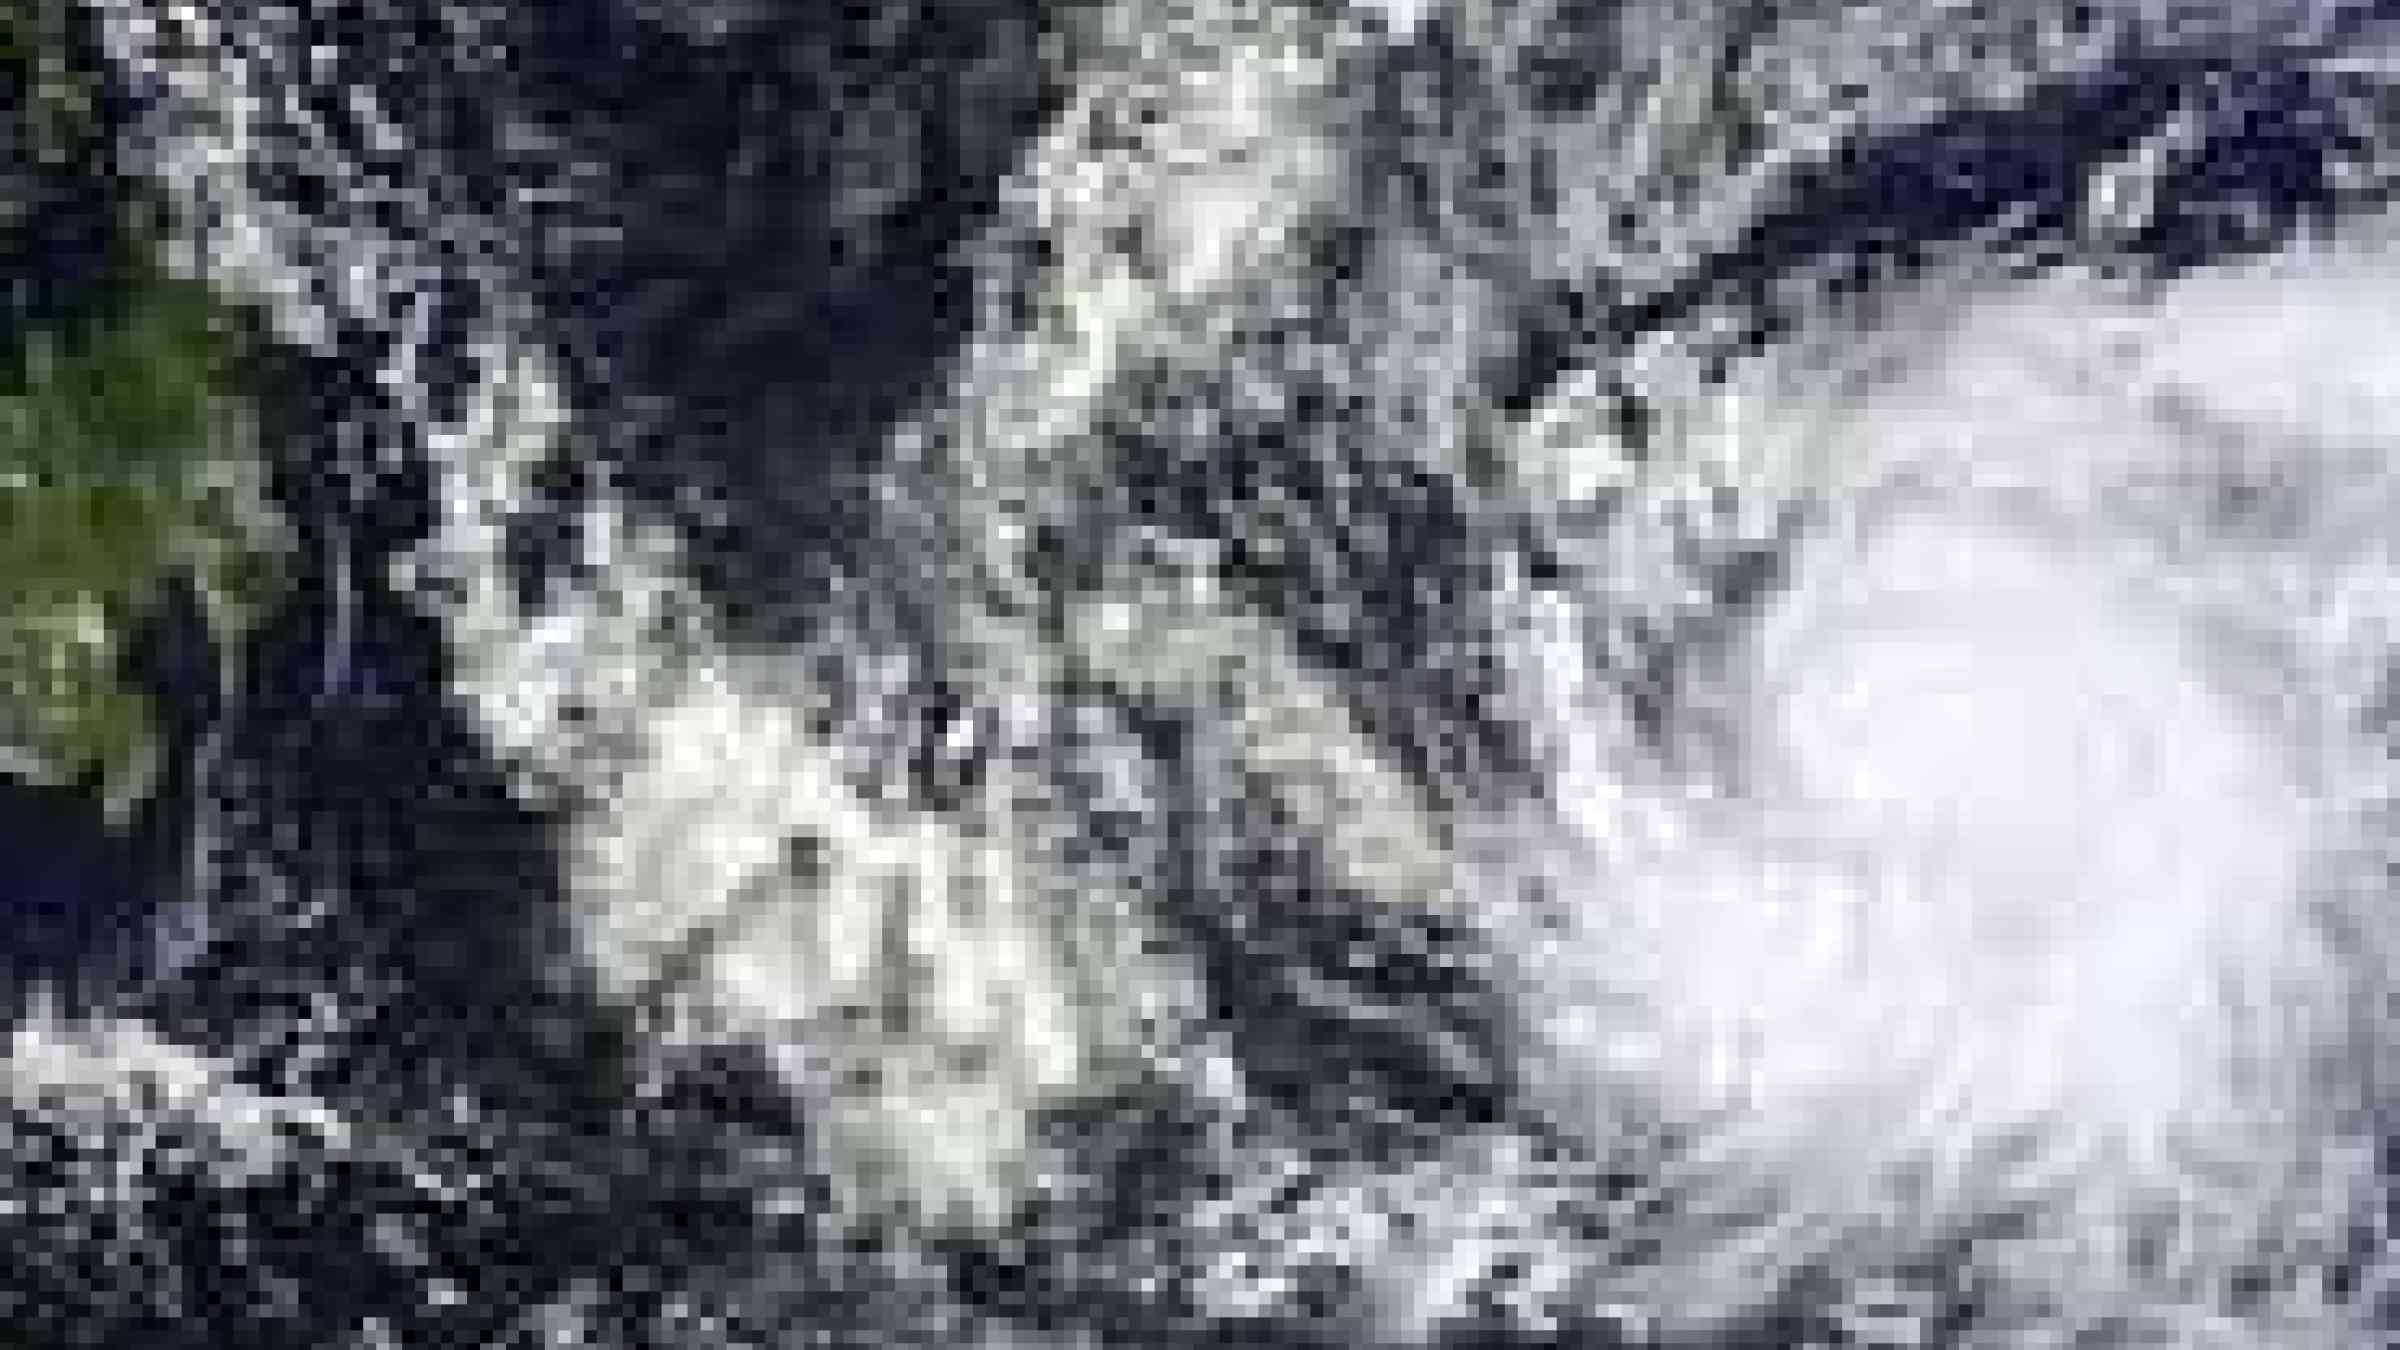 NASA captures Typhoon Bopha, CC BY 2.0http://www.flickr.com/photos/gsfc/8241425305/